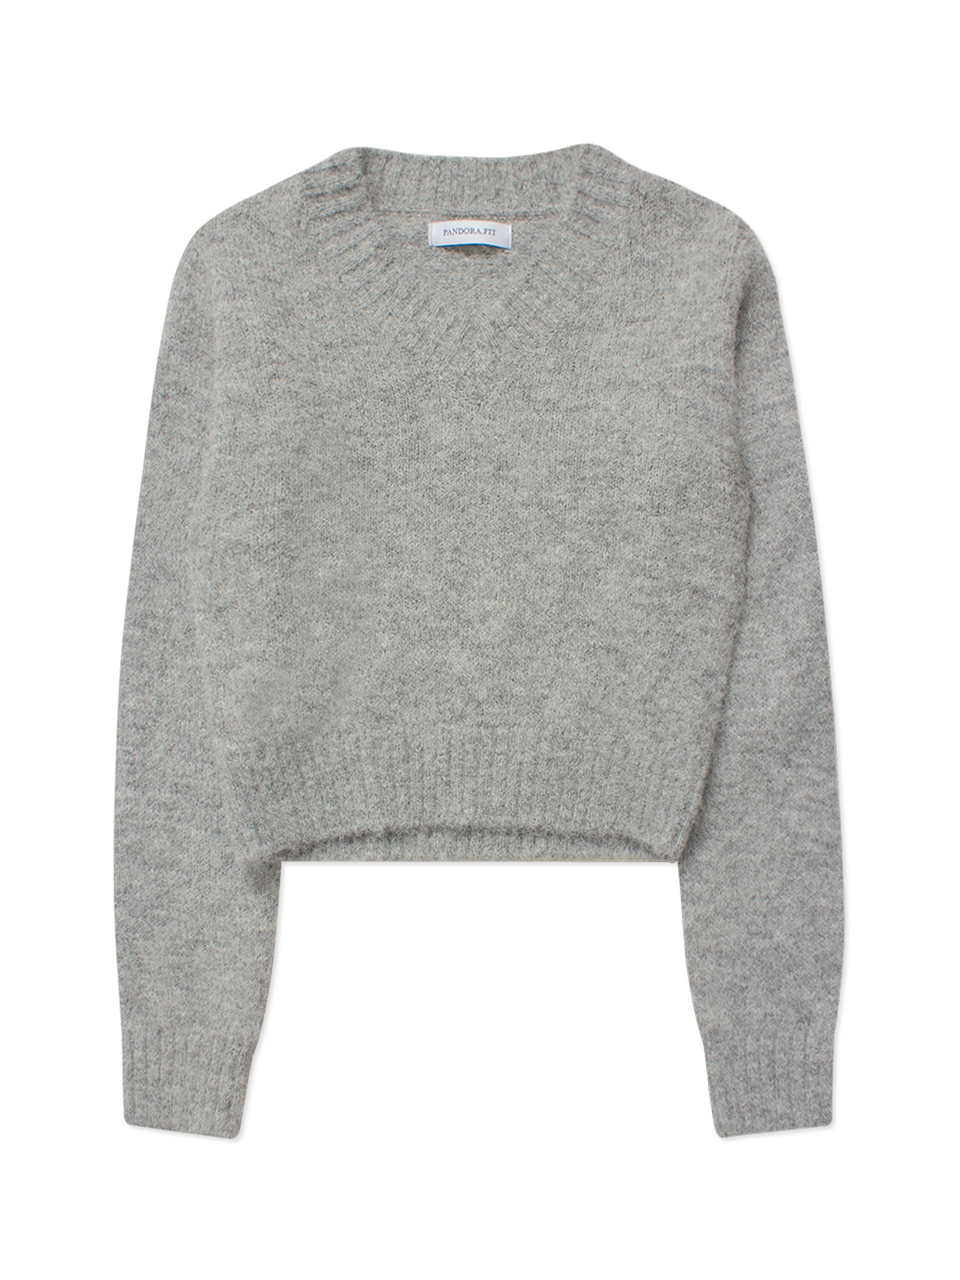 Meld Crop Knit Grey